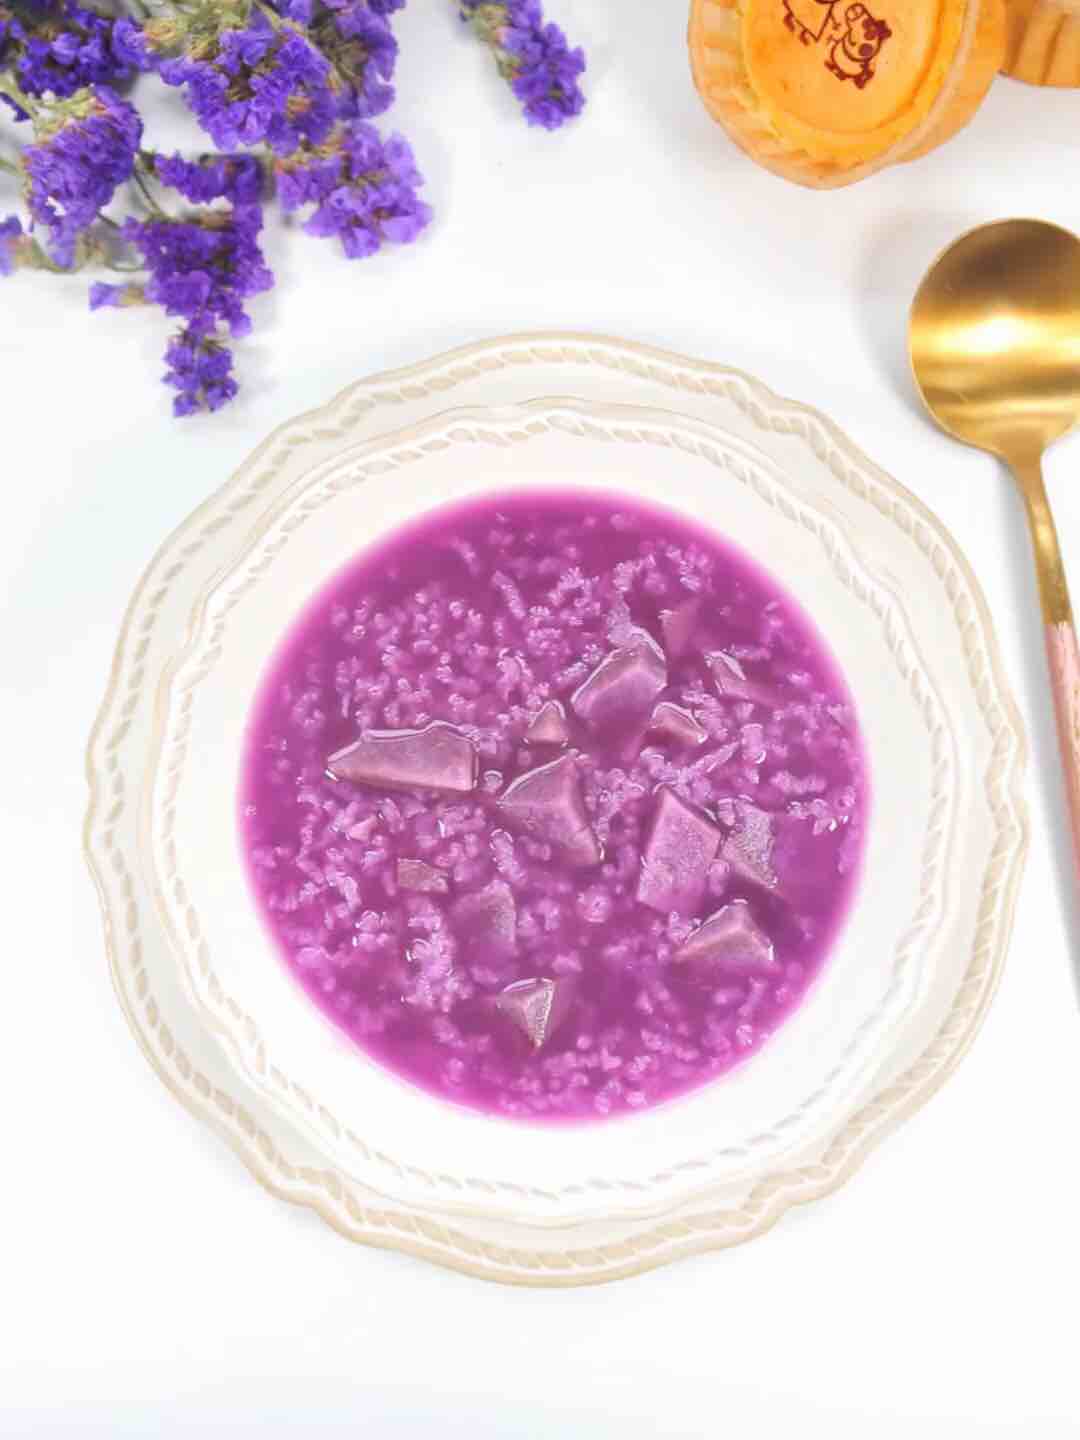 Purple Potato Congee recipe